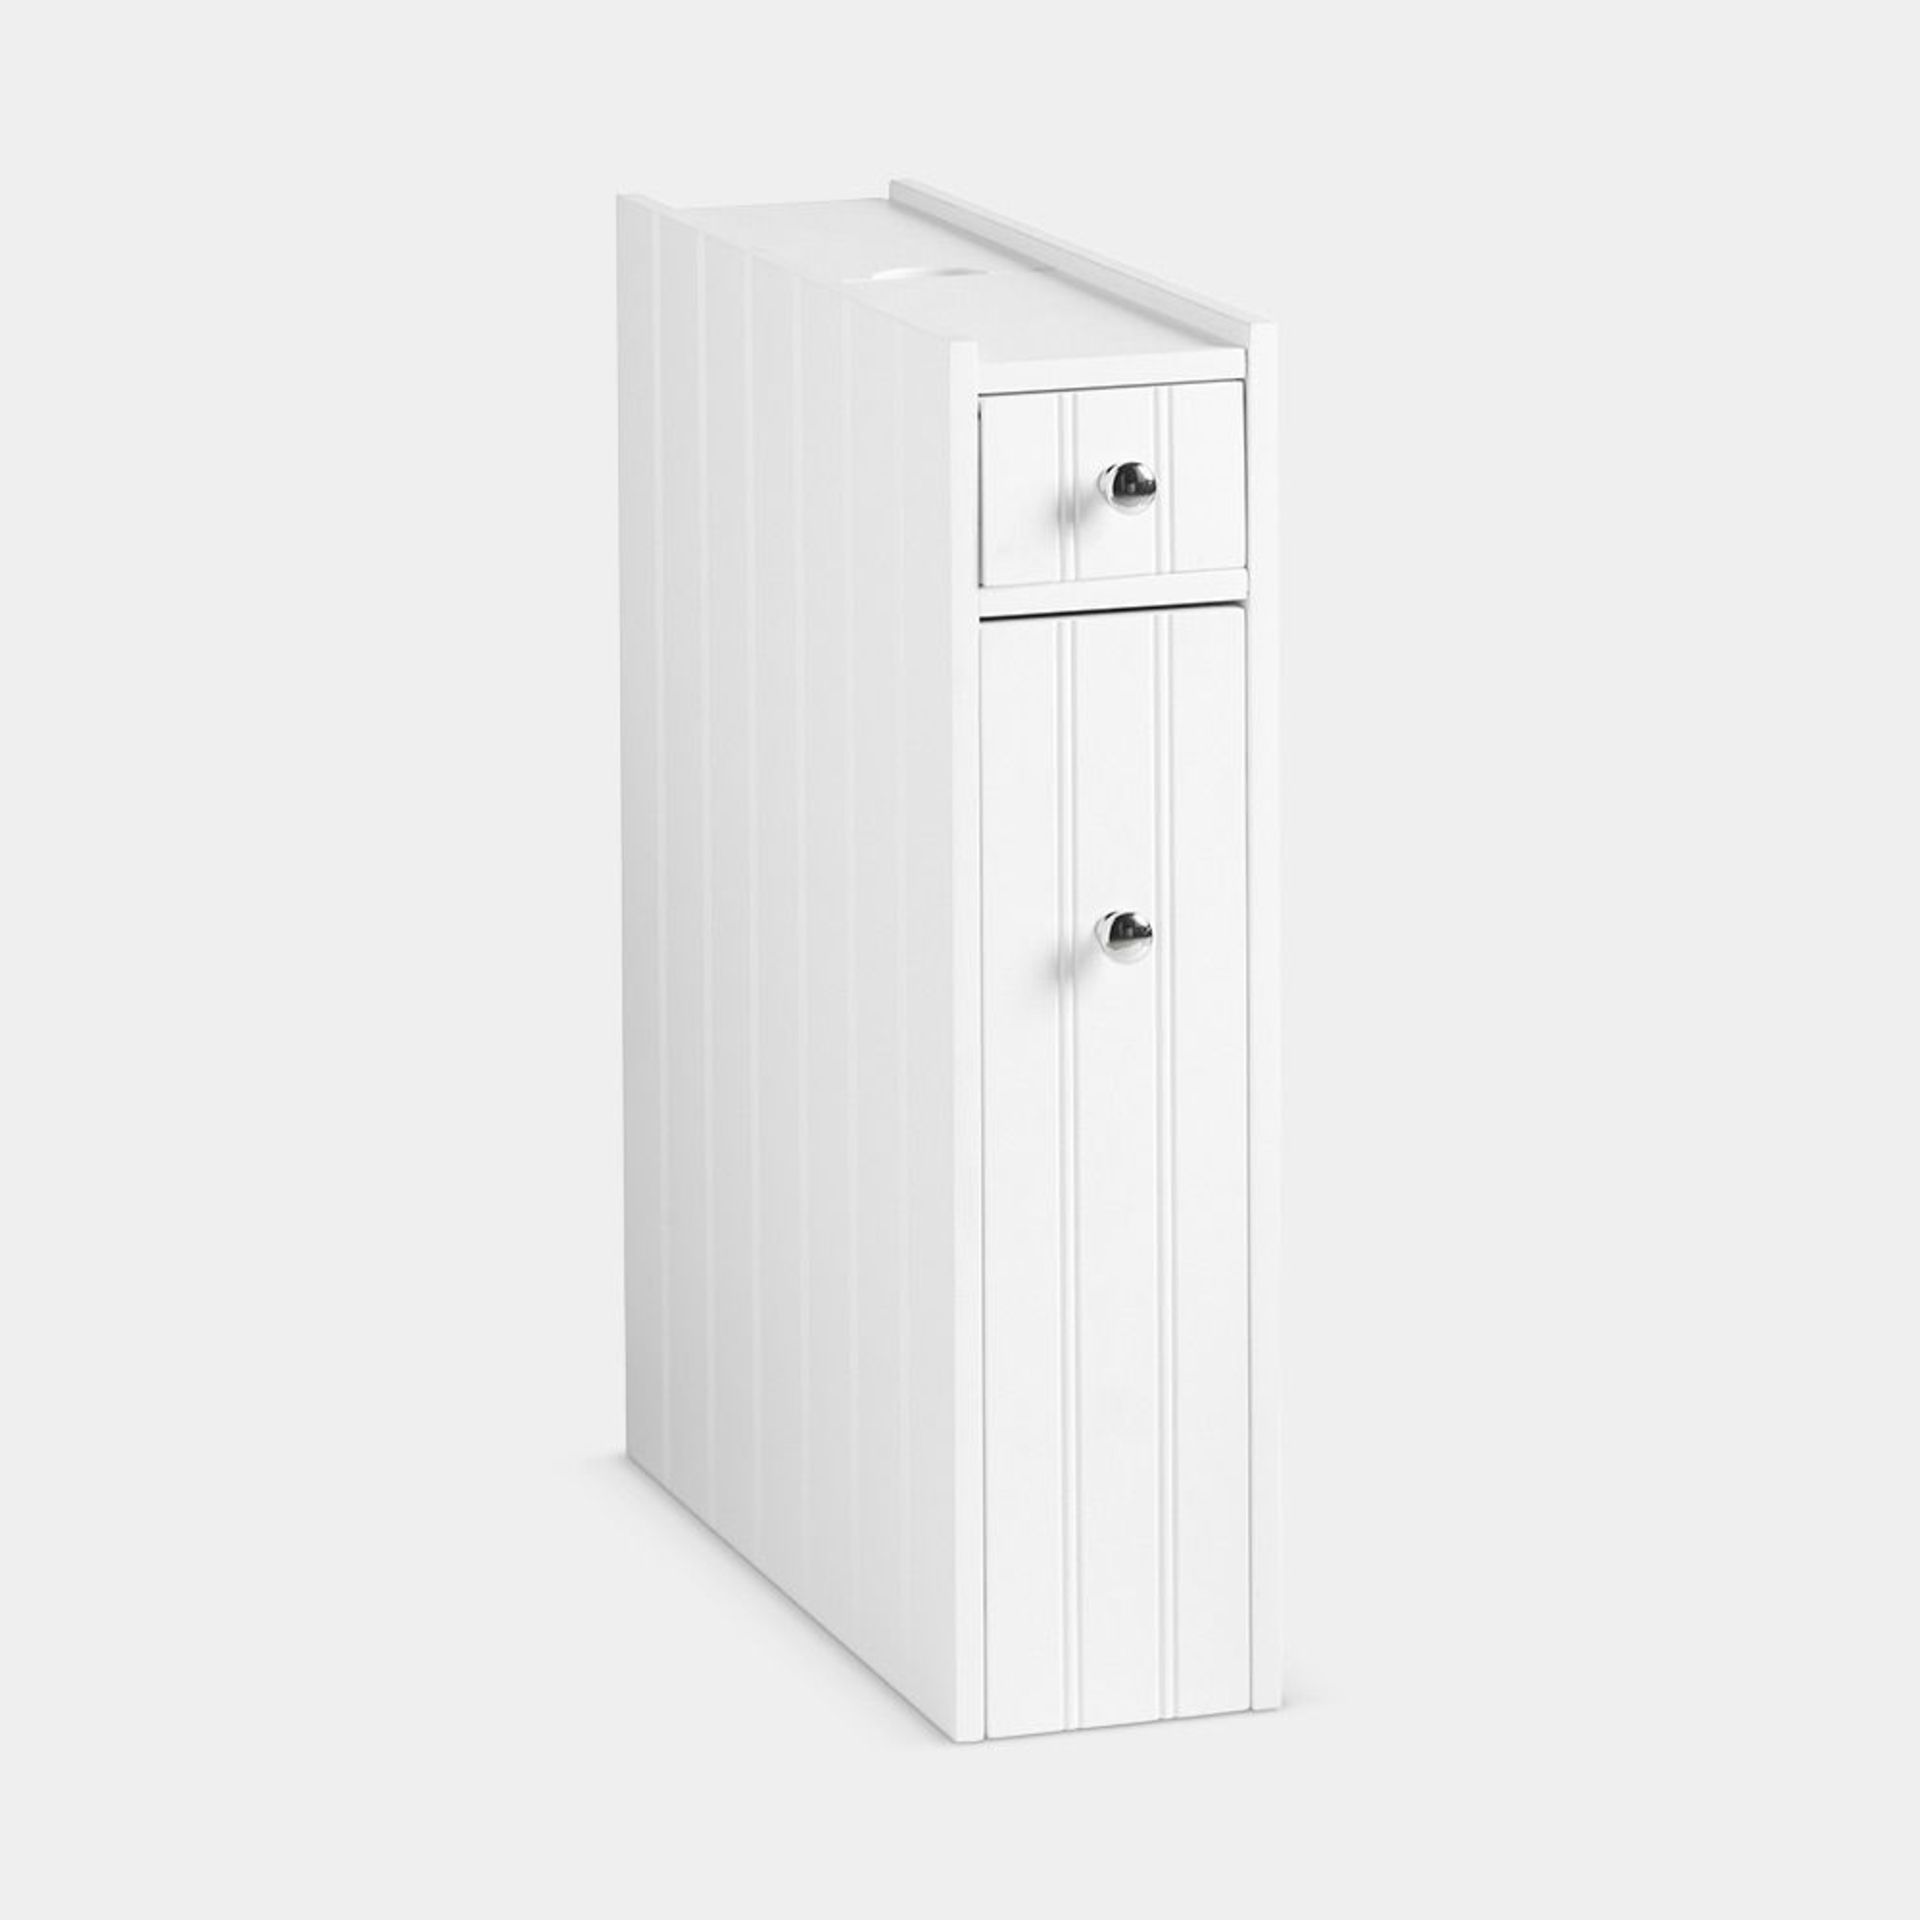 Holbrook White Slim Bathroom Storage Unit. - ER33. If you’d like more storage in your bathroom but